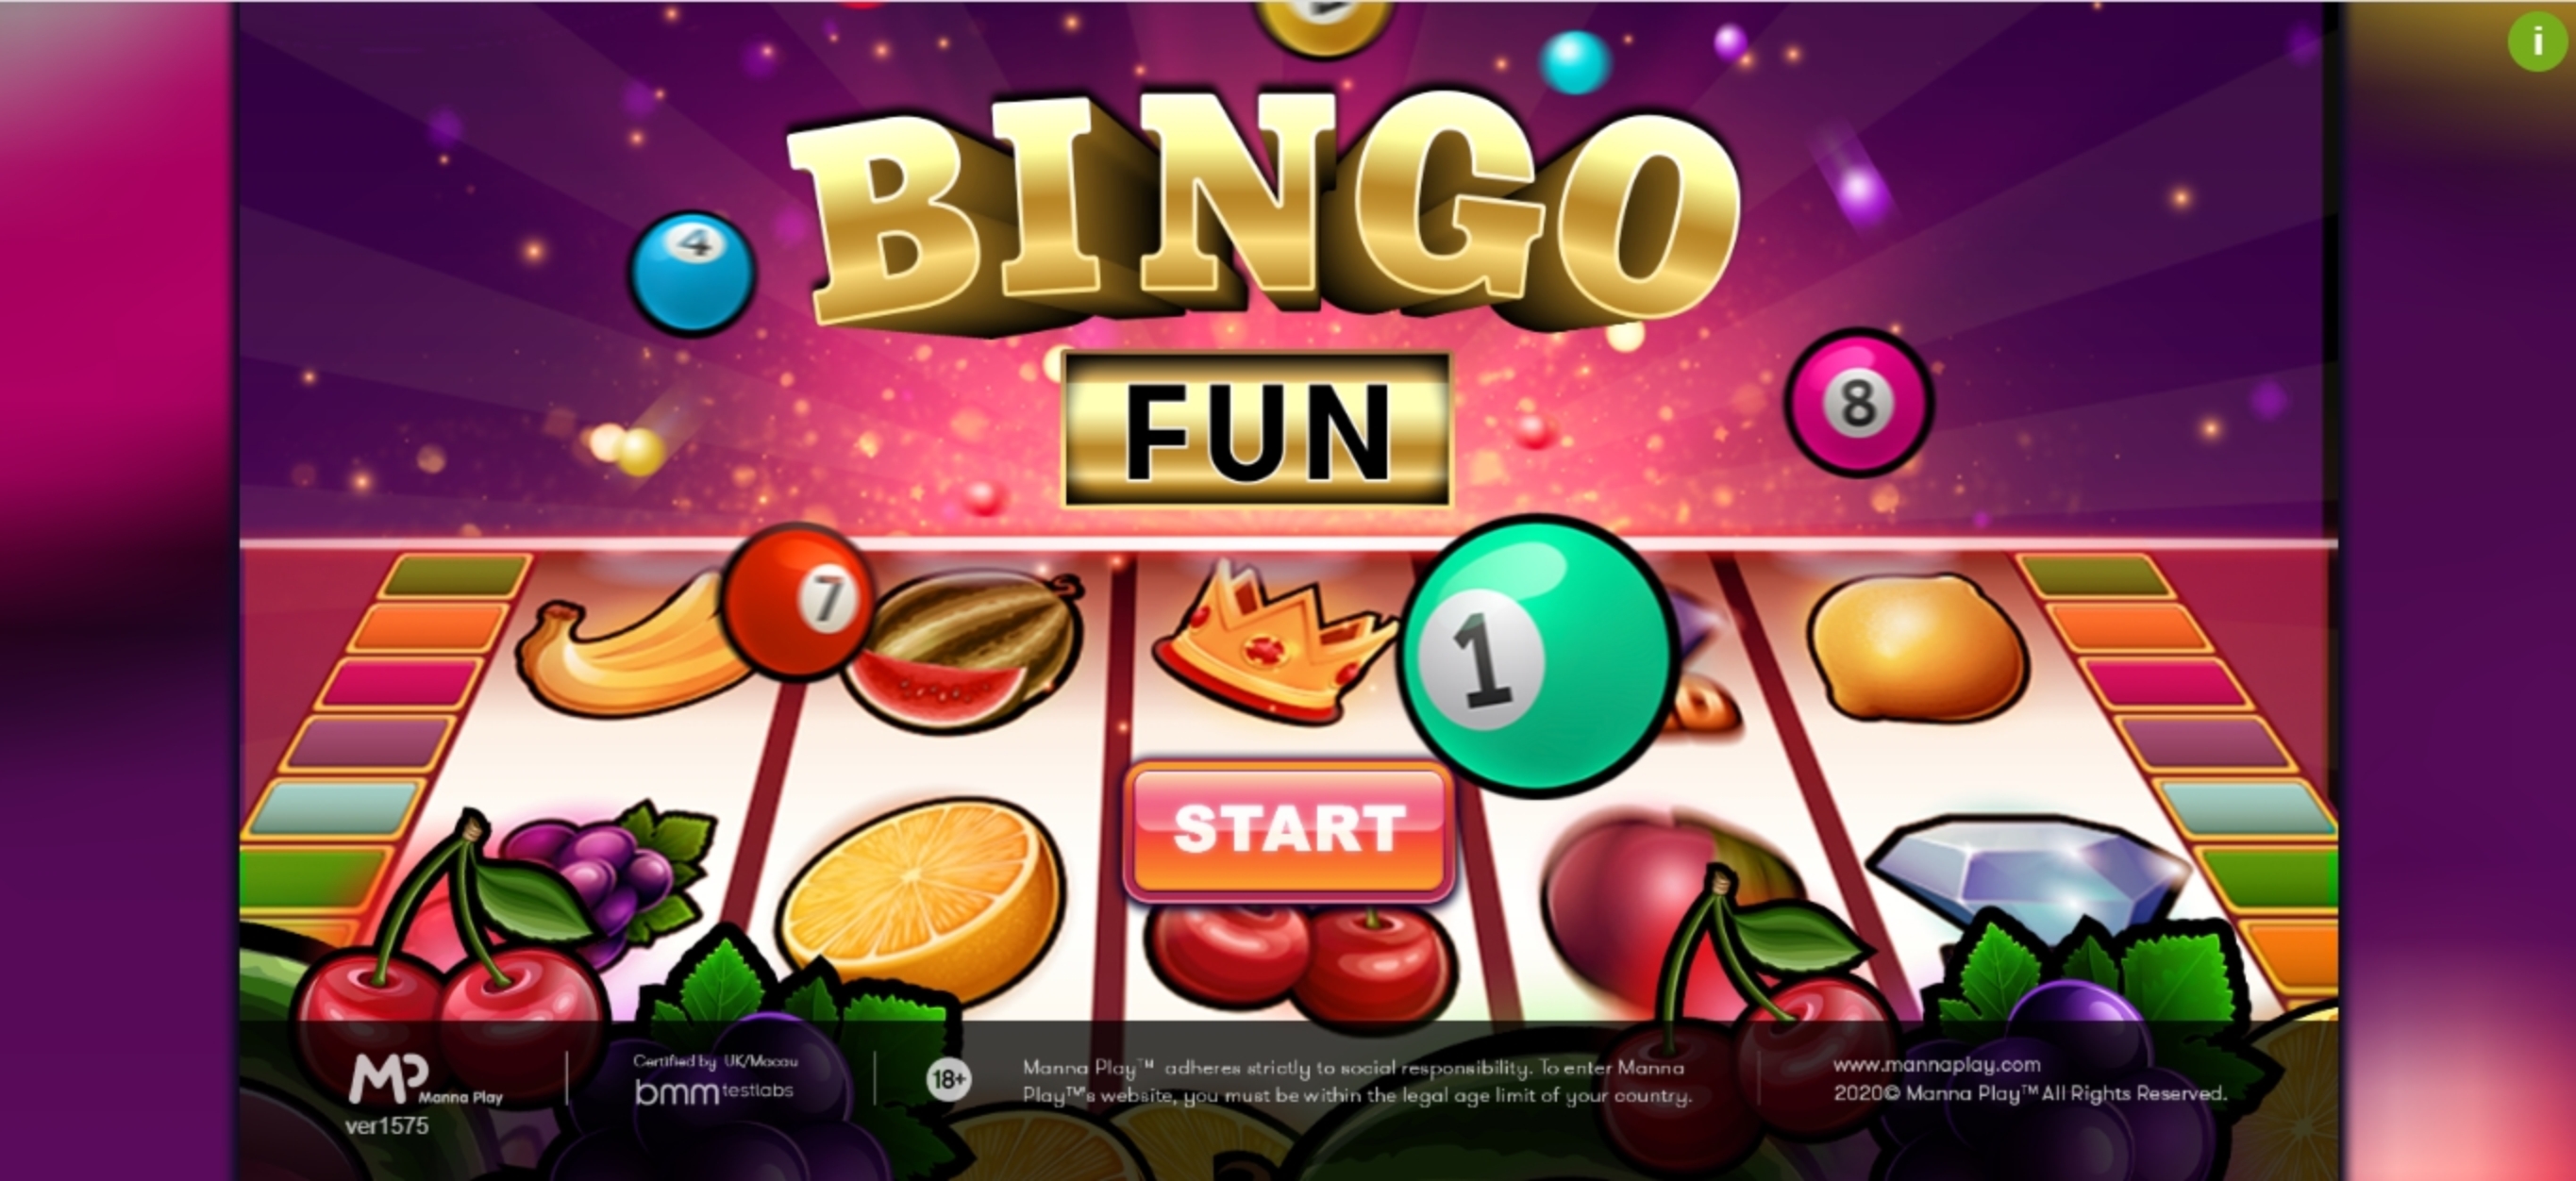 Play Bingo Fun Free Casino Slot Game by Manna Play